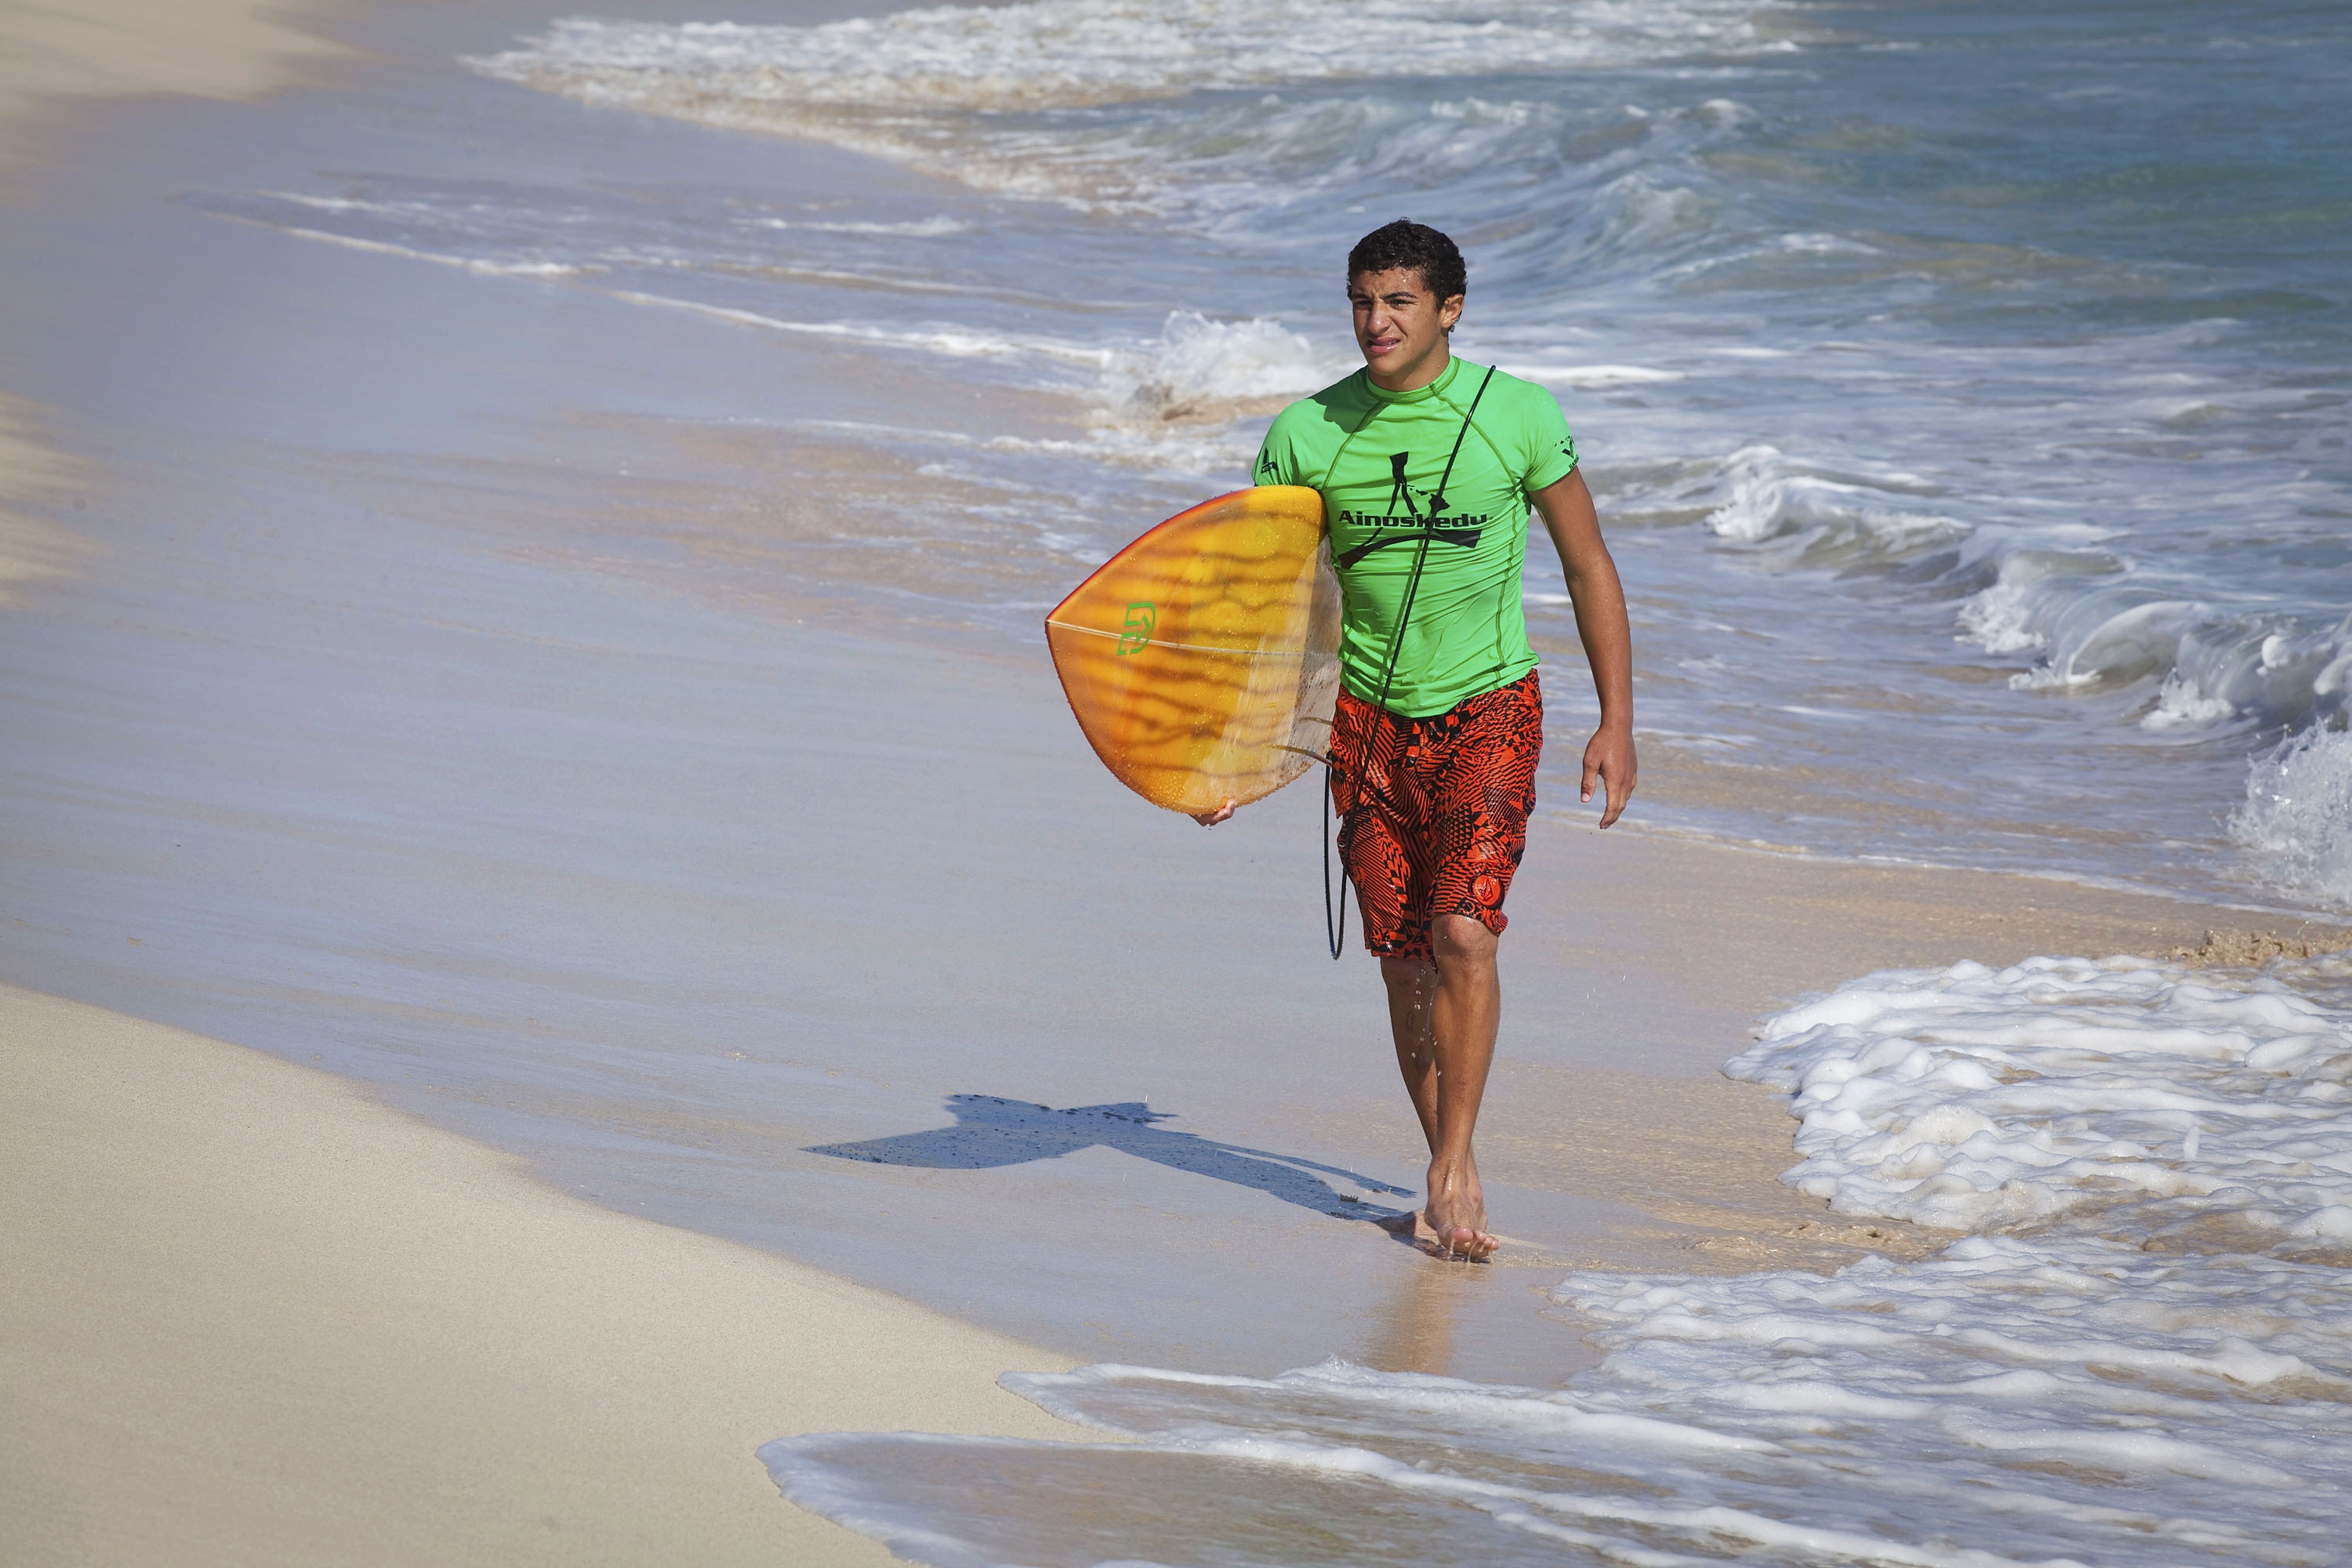 Surfer on the Shore, Activity, Blue, Ocean, Sea, HQ Photo